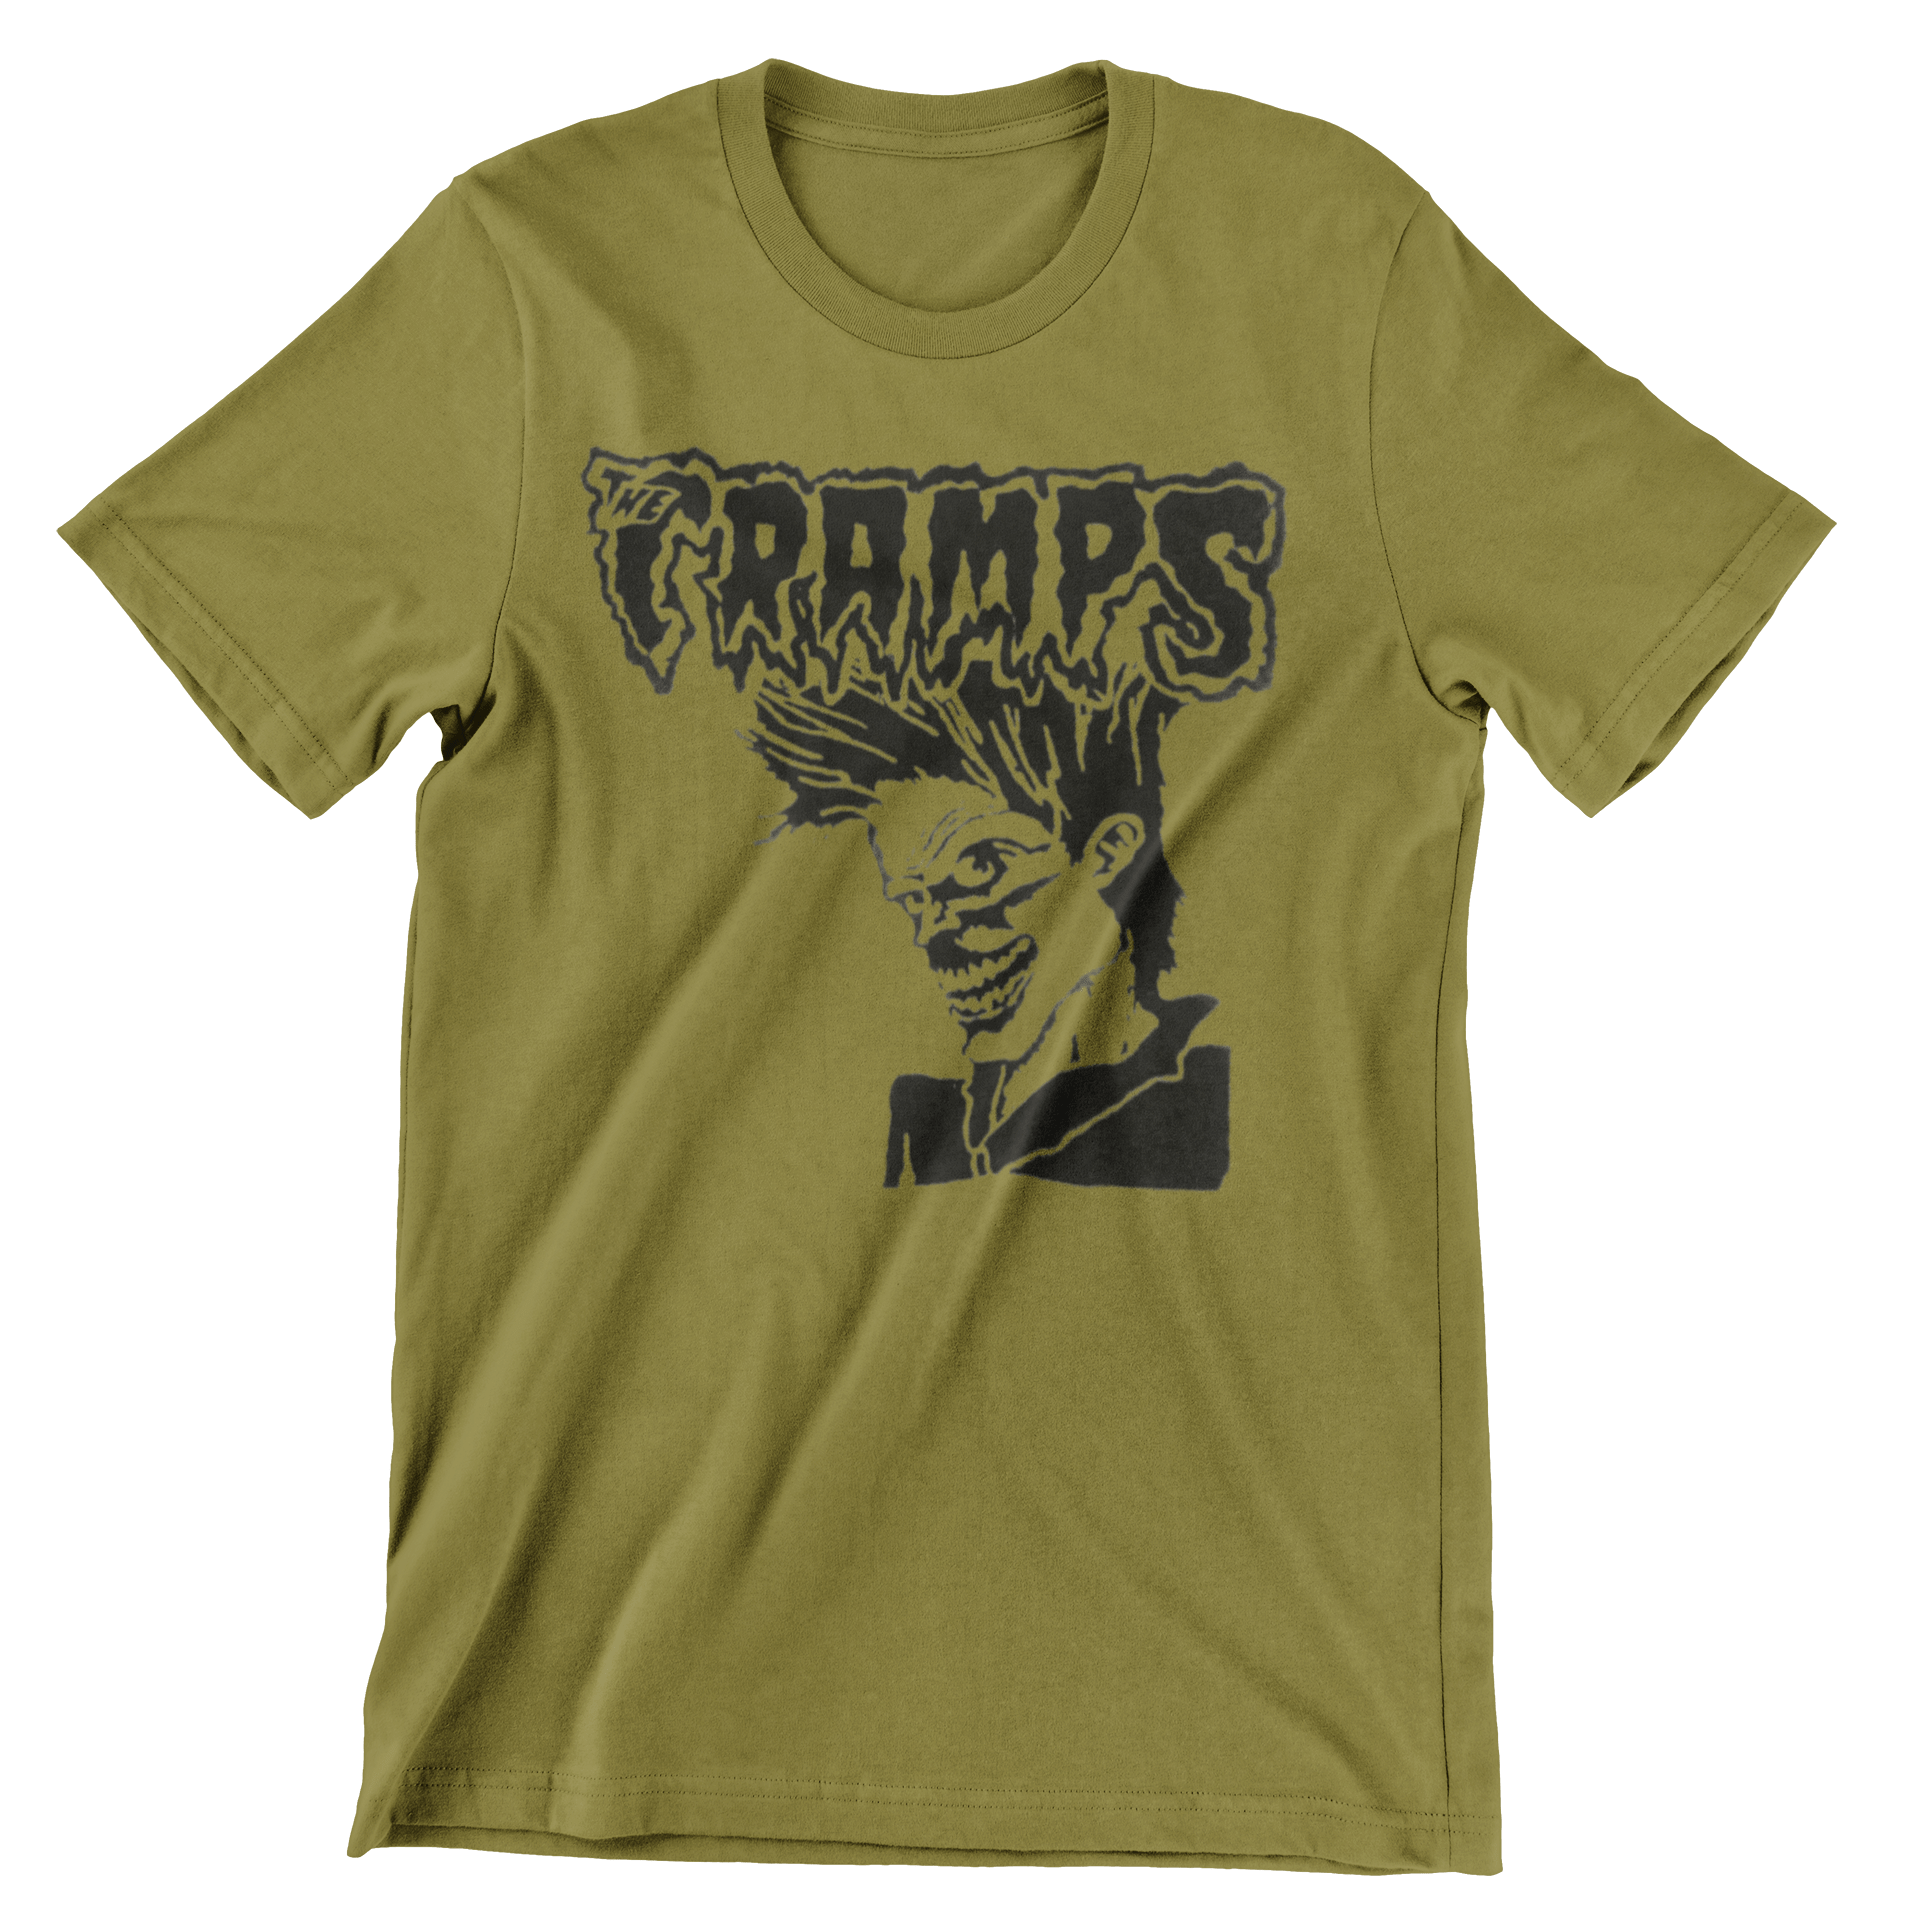 The Cramps T Shirt Punk Rock